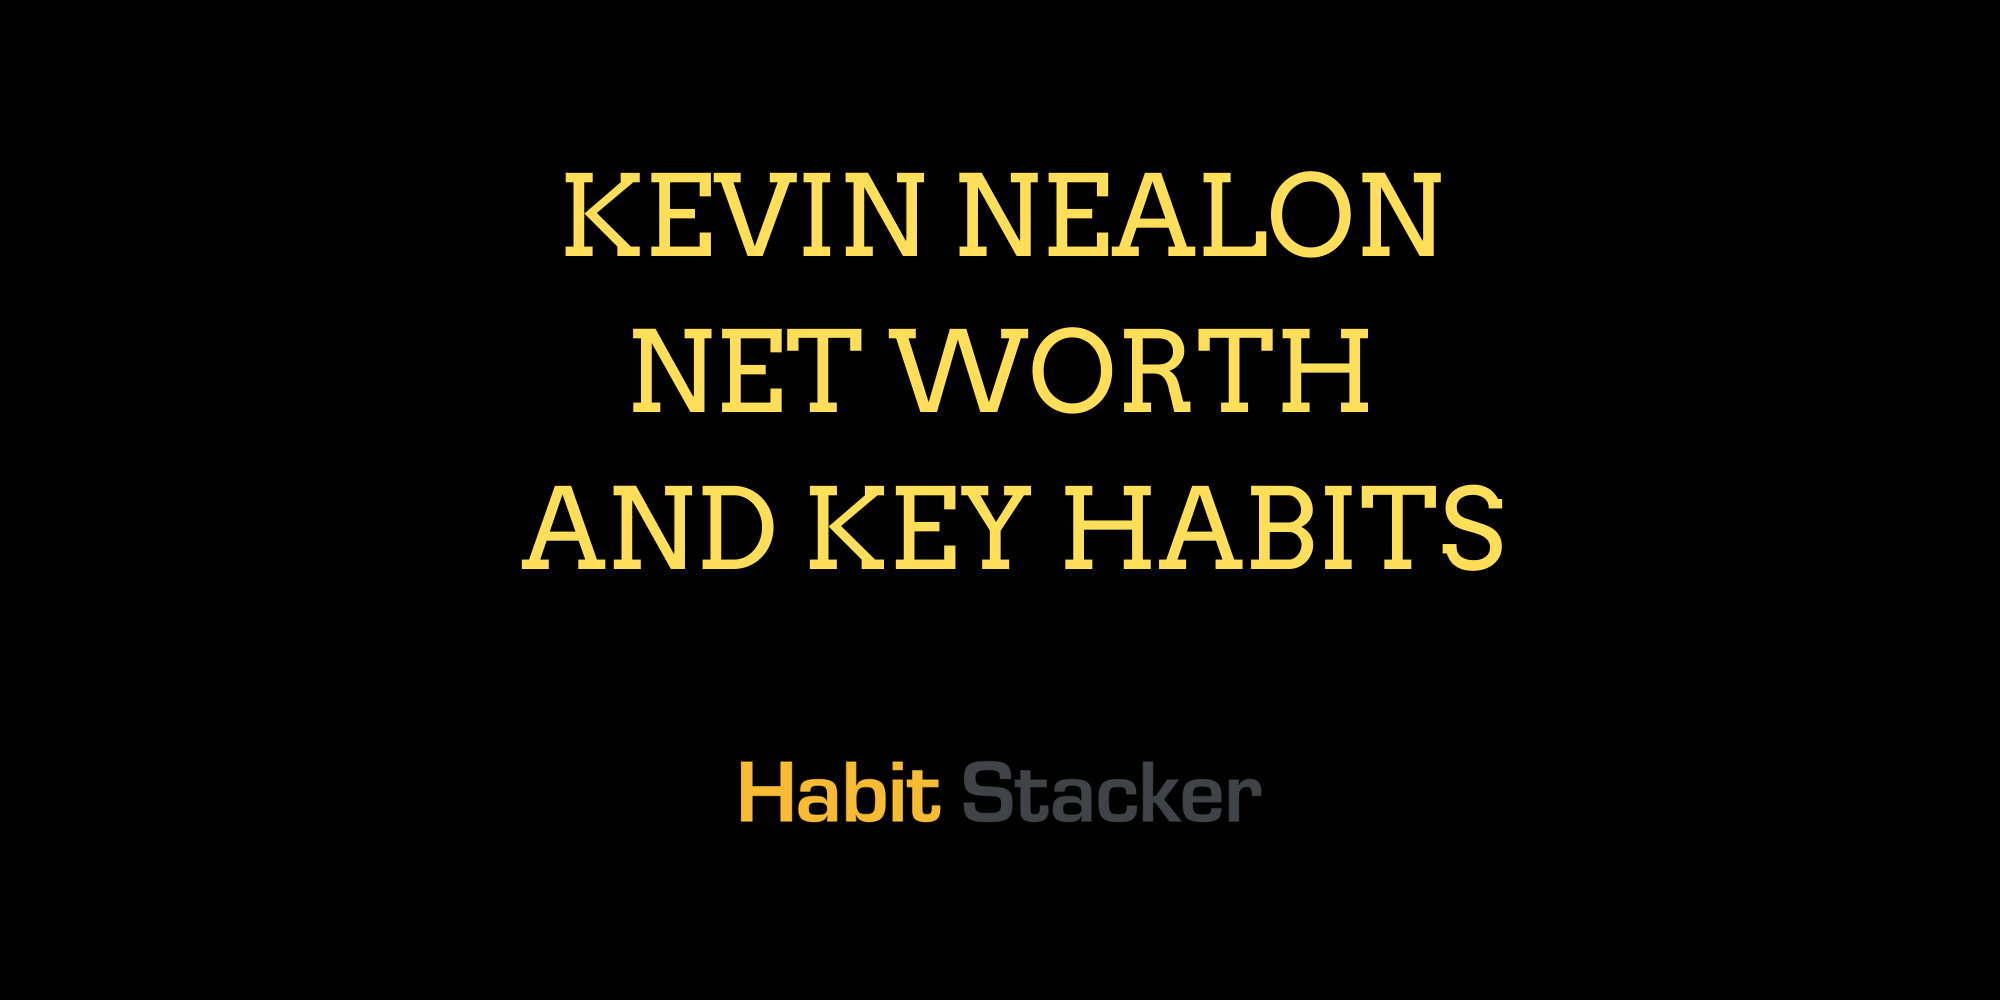 Kevin Nealon Net Worth and Key Habits